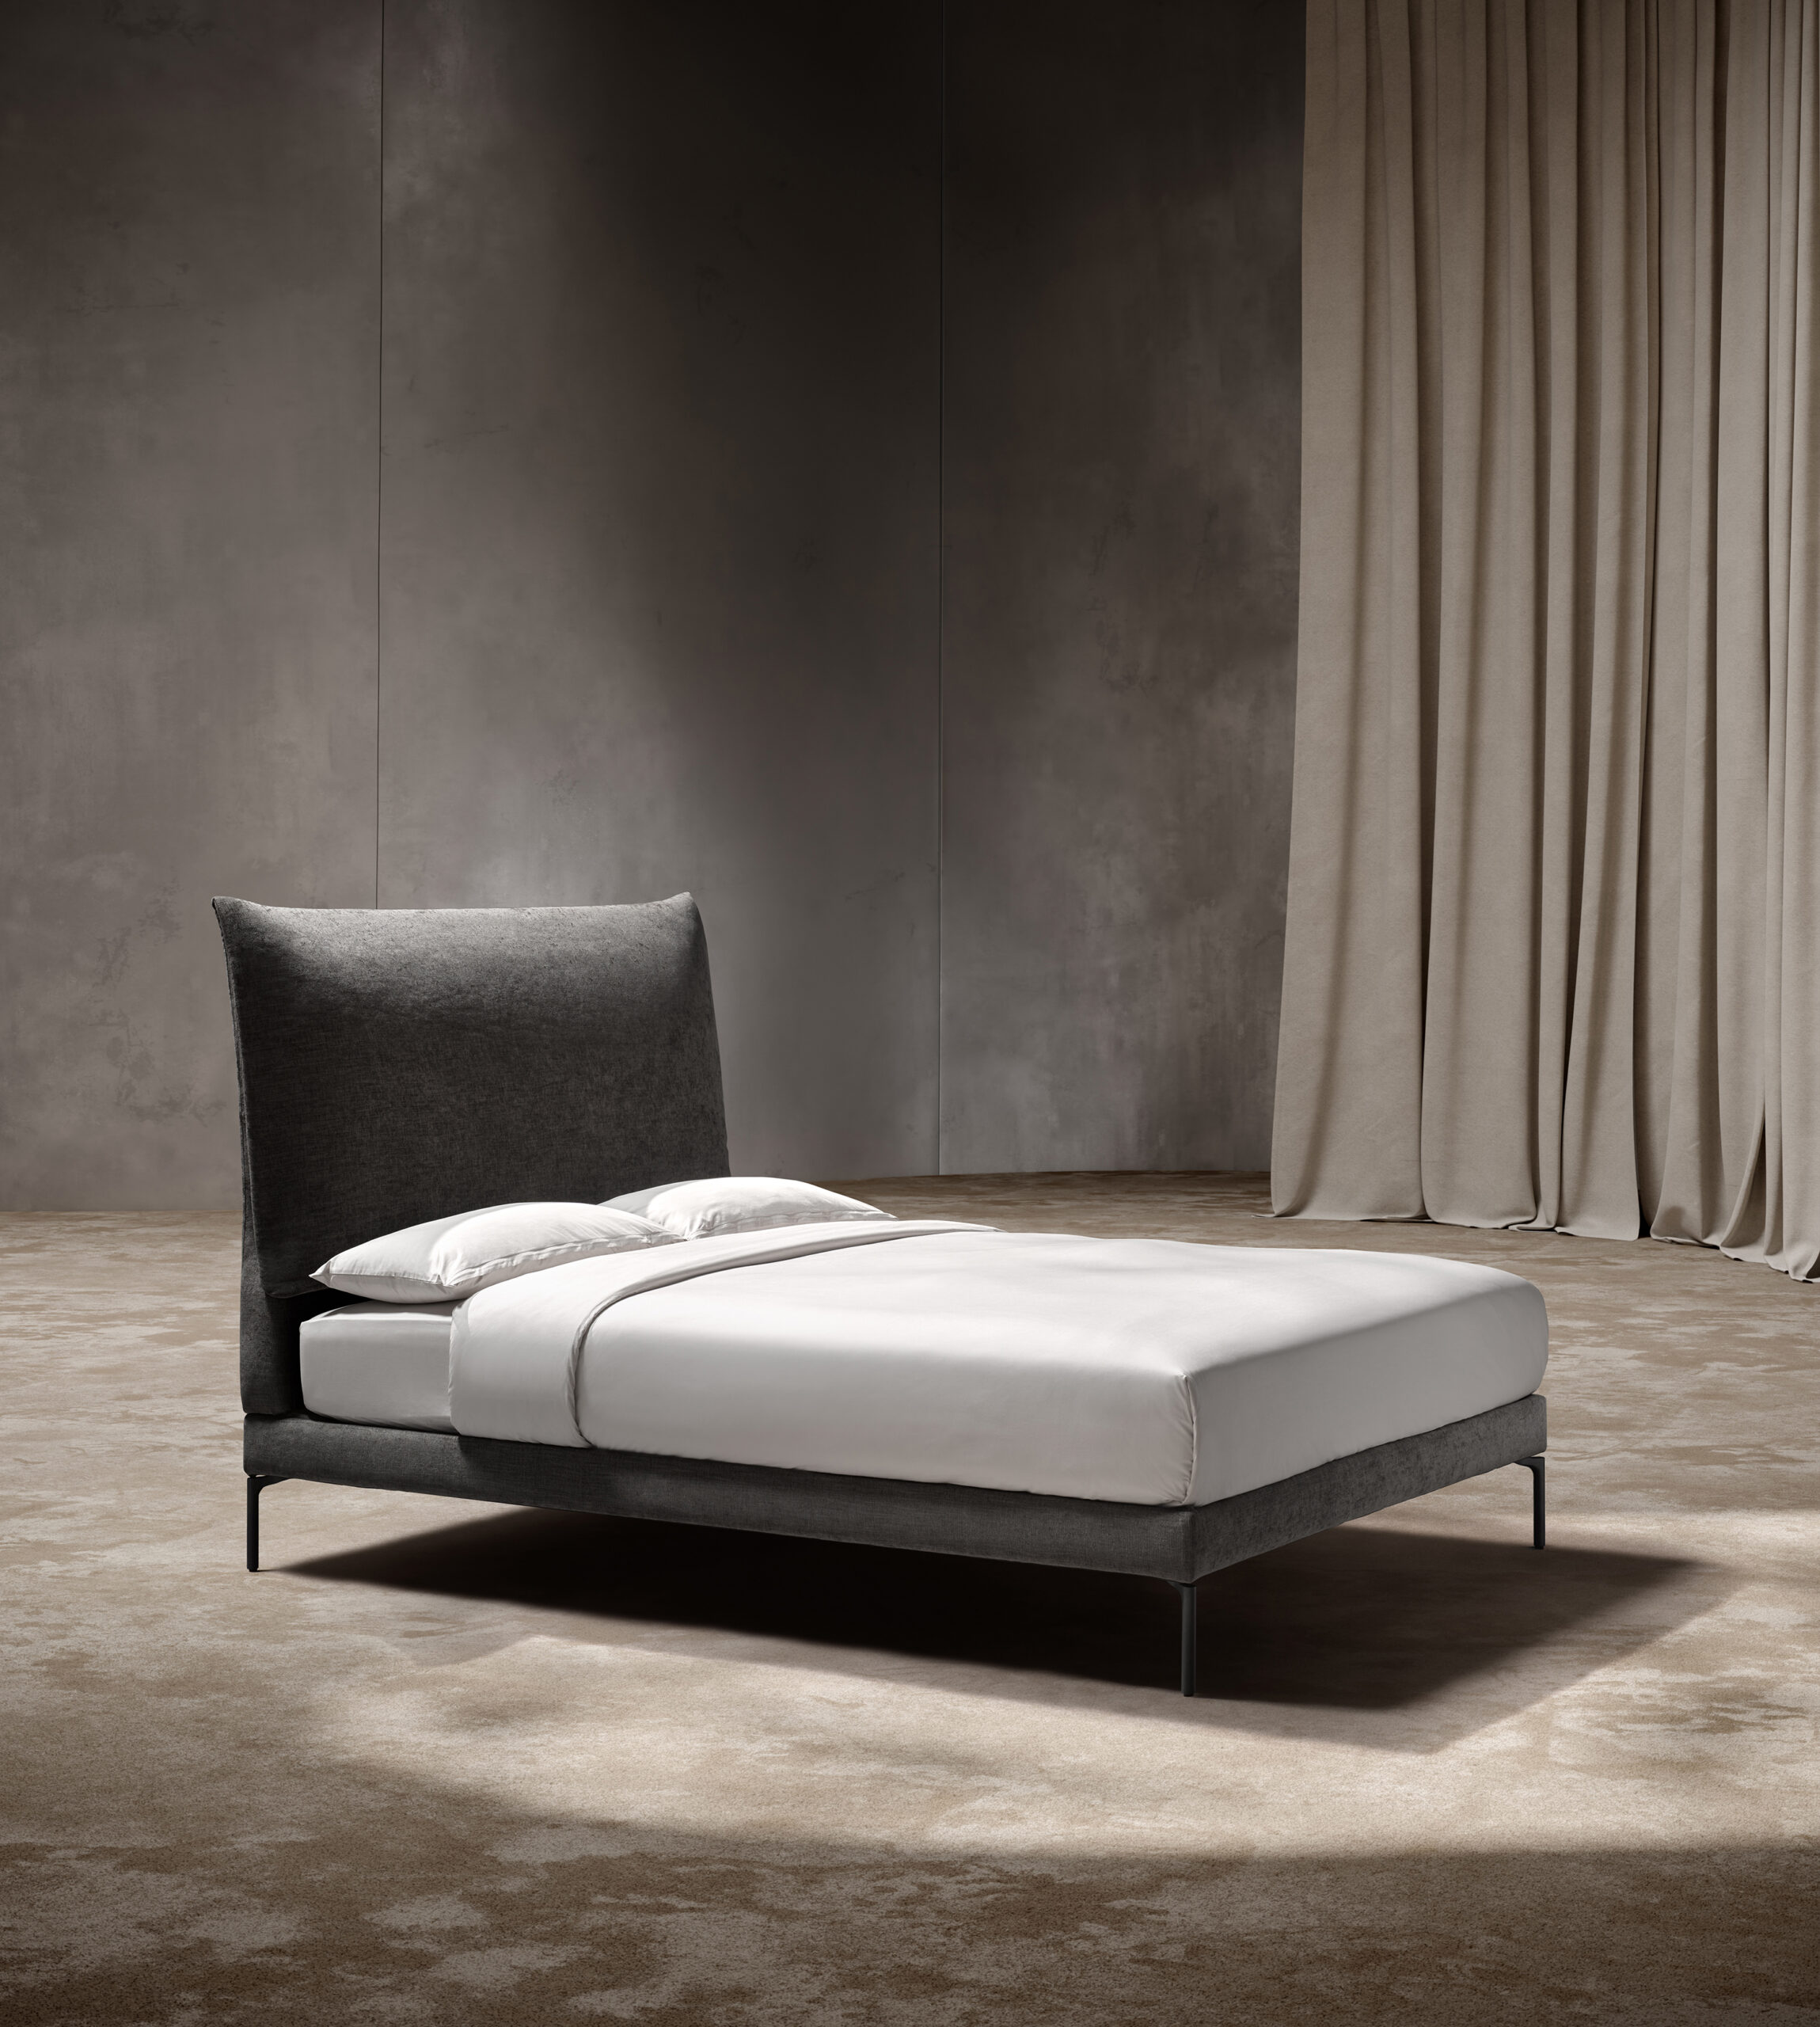 Arco bed designed by Debiasi Sandri for Schramm